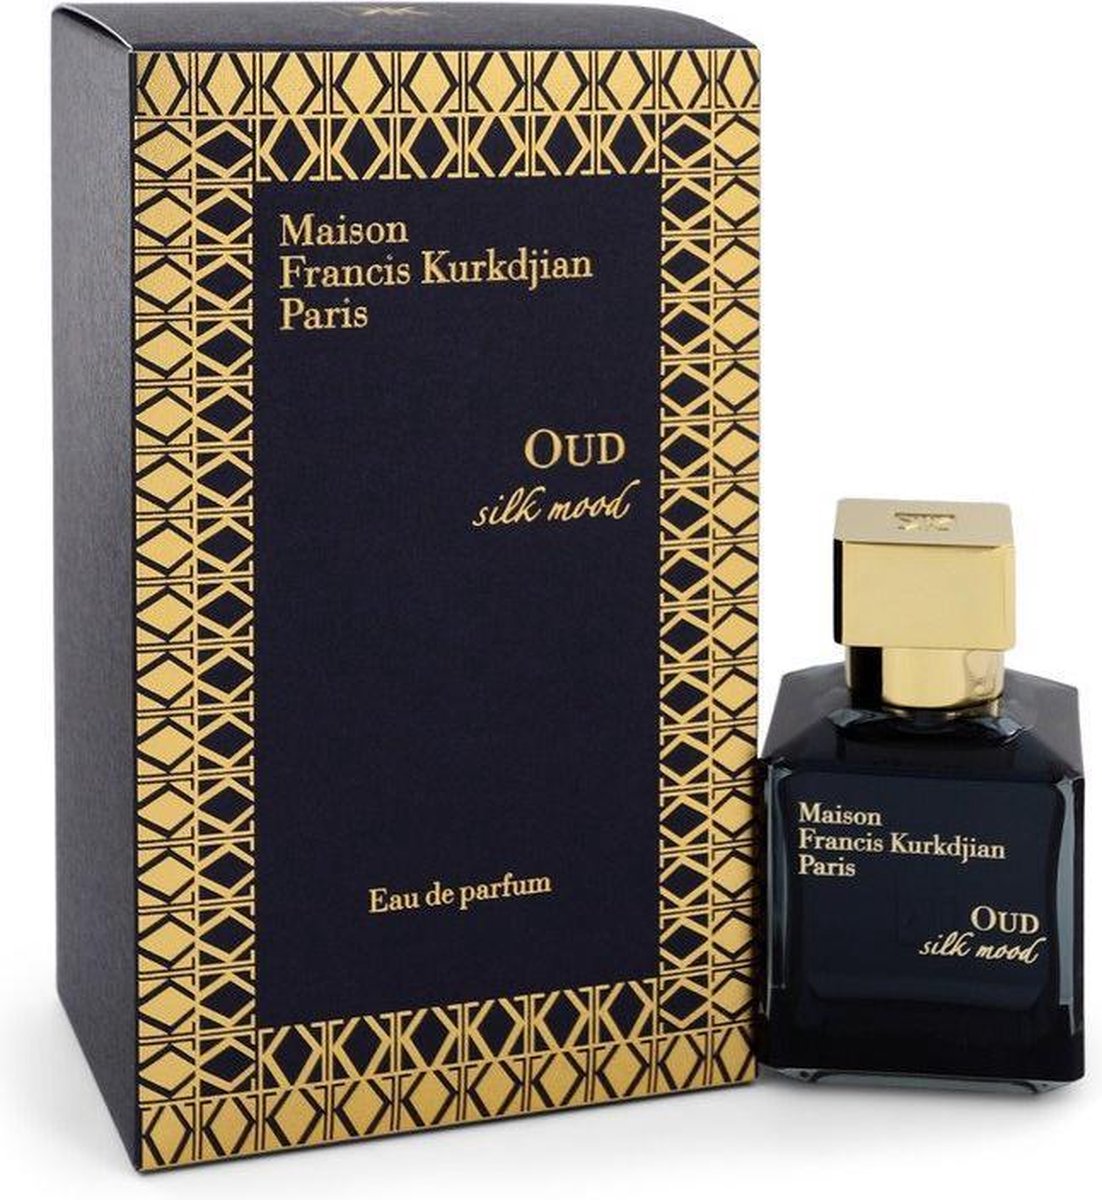 Maison Francis Kurkdjian Oud Silk Mood eau de parfum 70ml